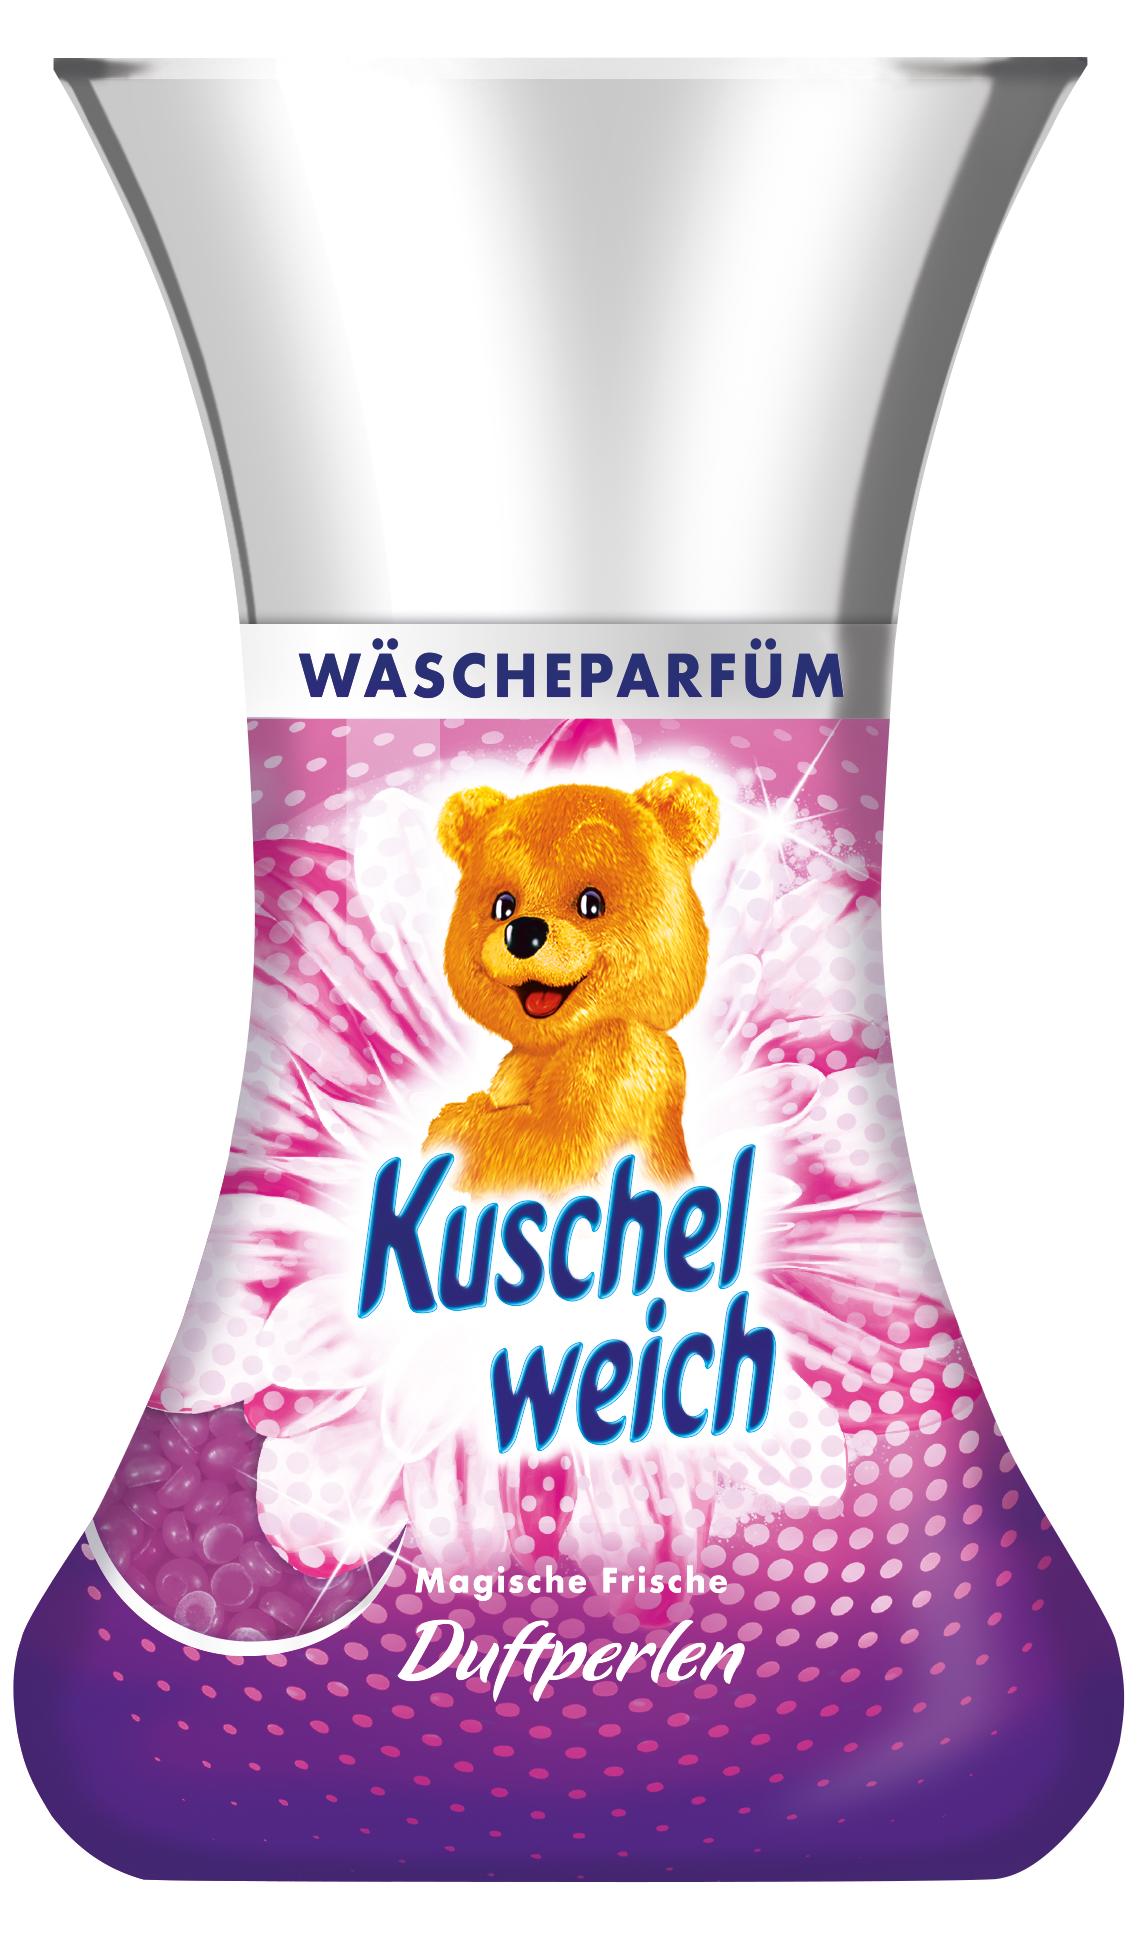 Kuschelweich Wäscheparfum - Duftperlen